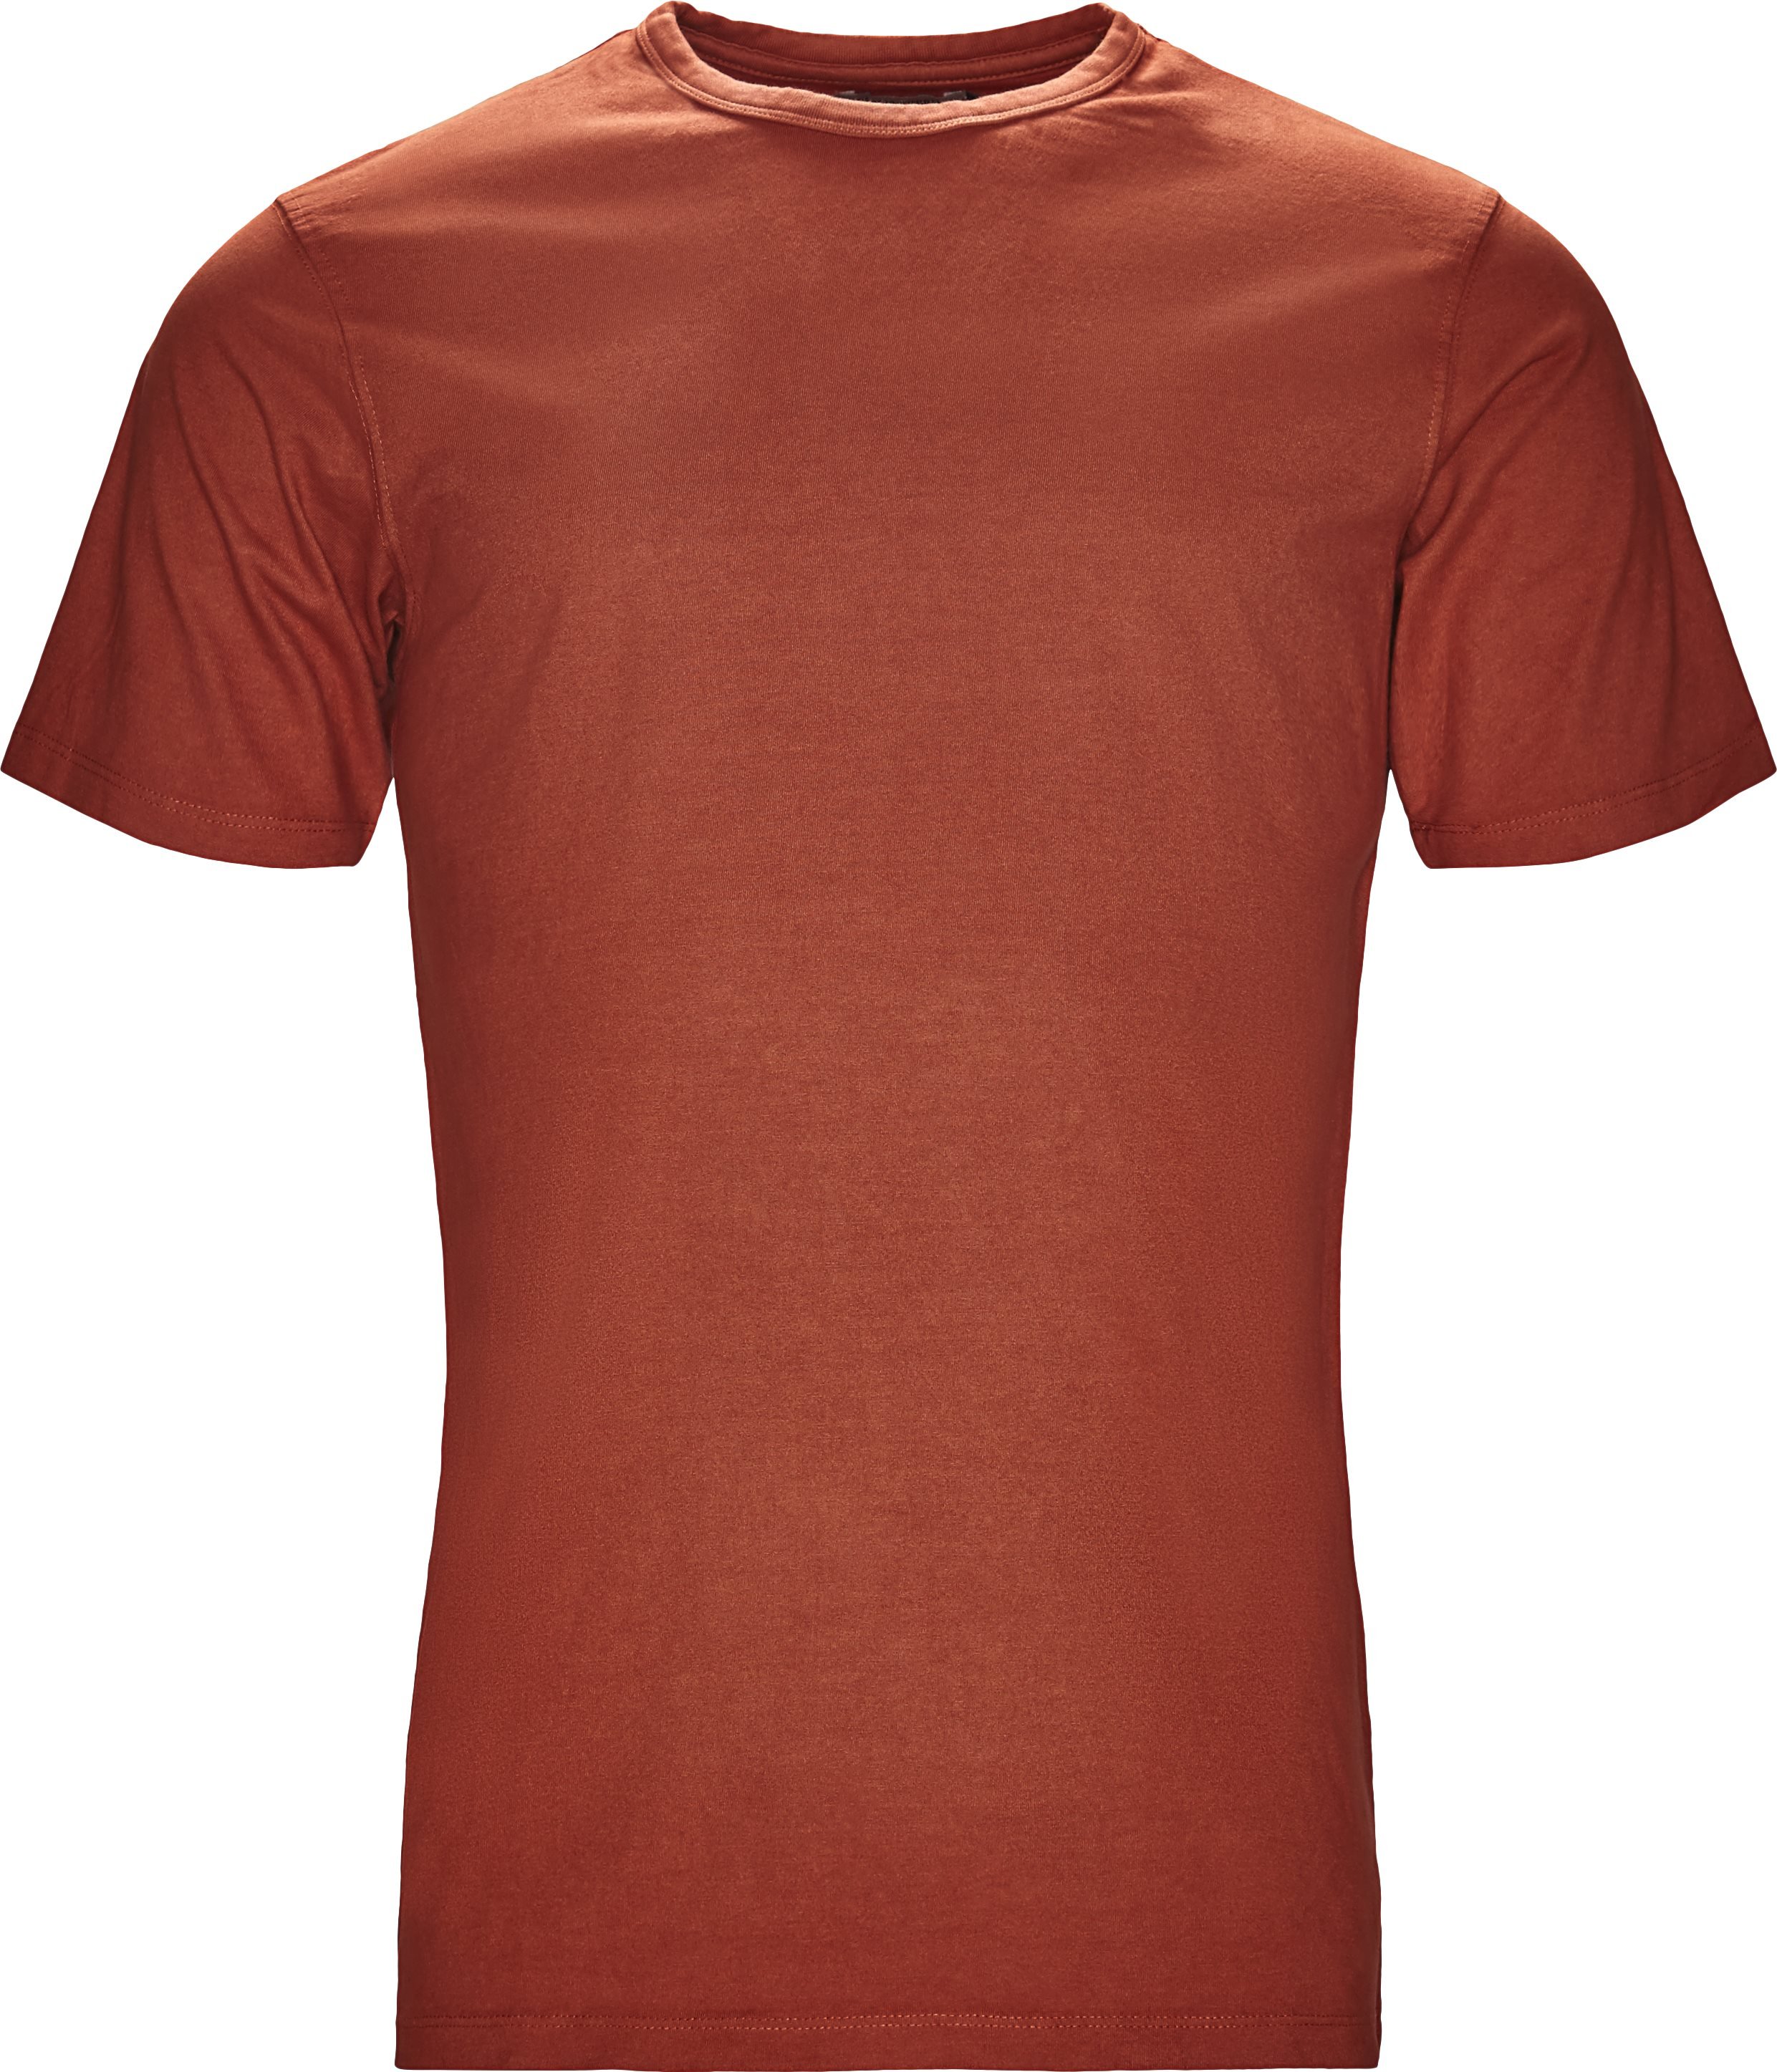 Doppia Corsia T-shirts DYLAN Orange